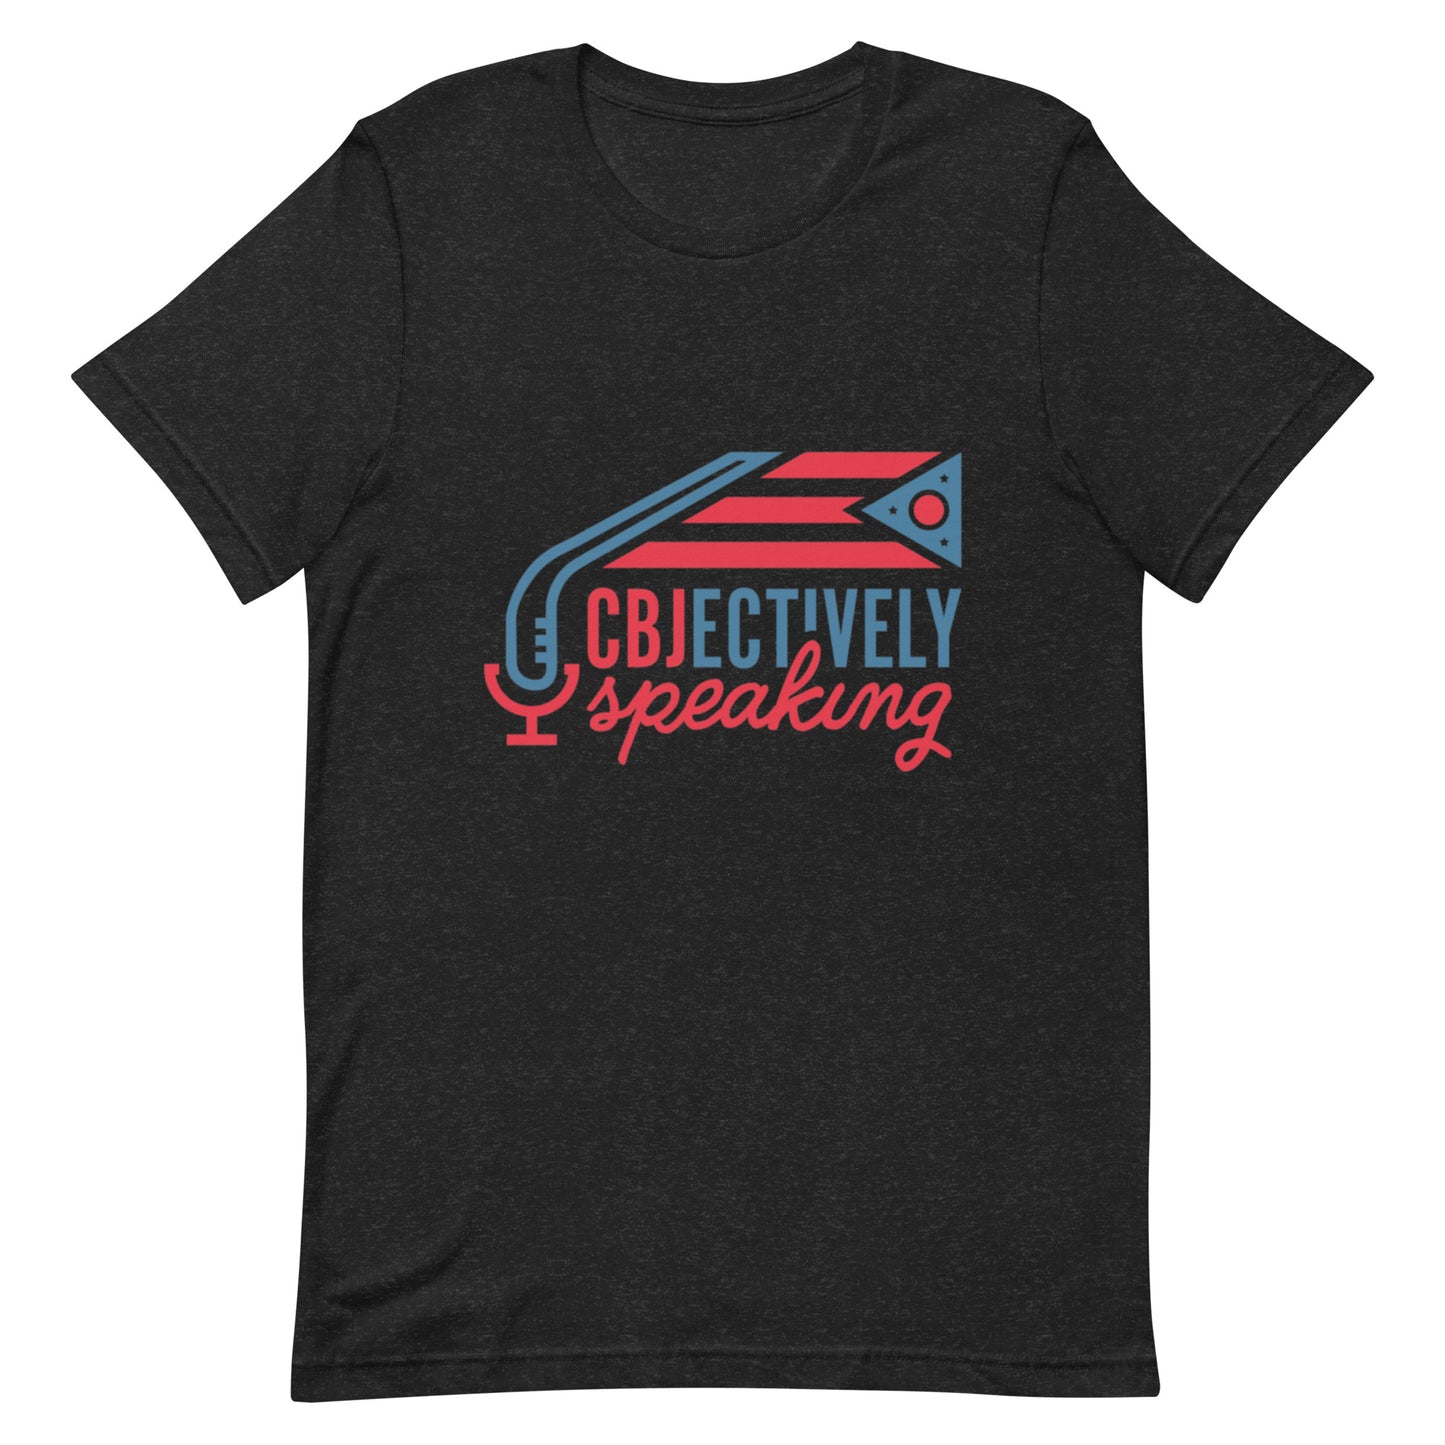 CBJectively Speaking Unisex t-shirt